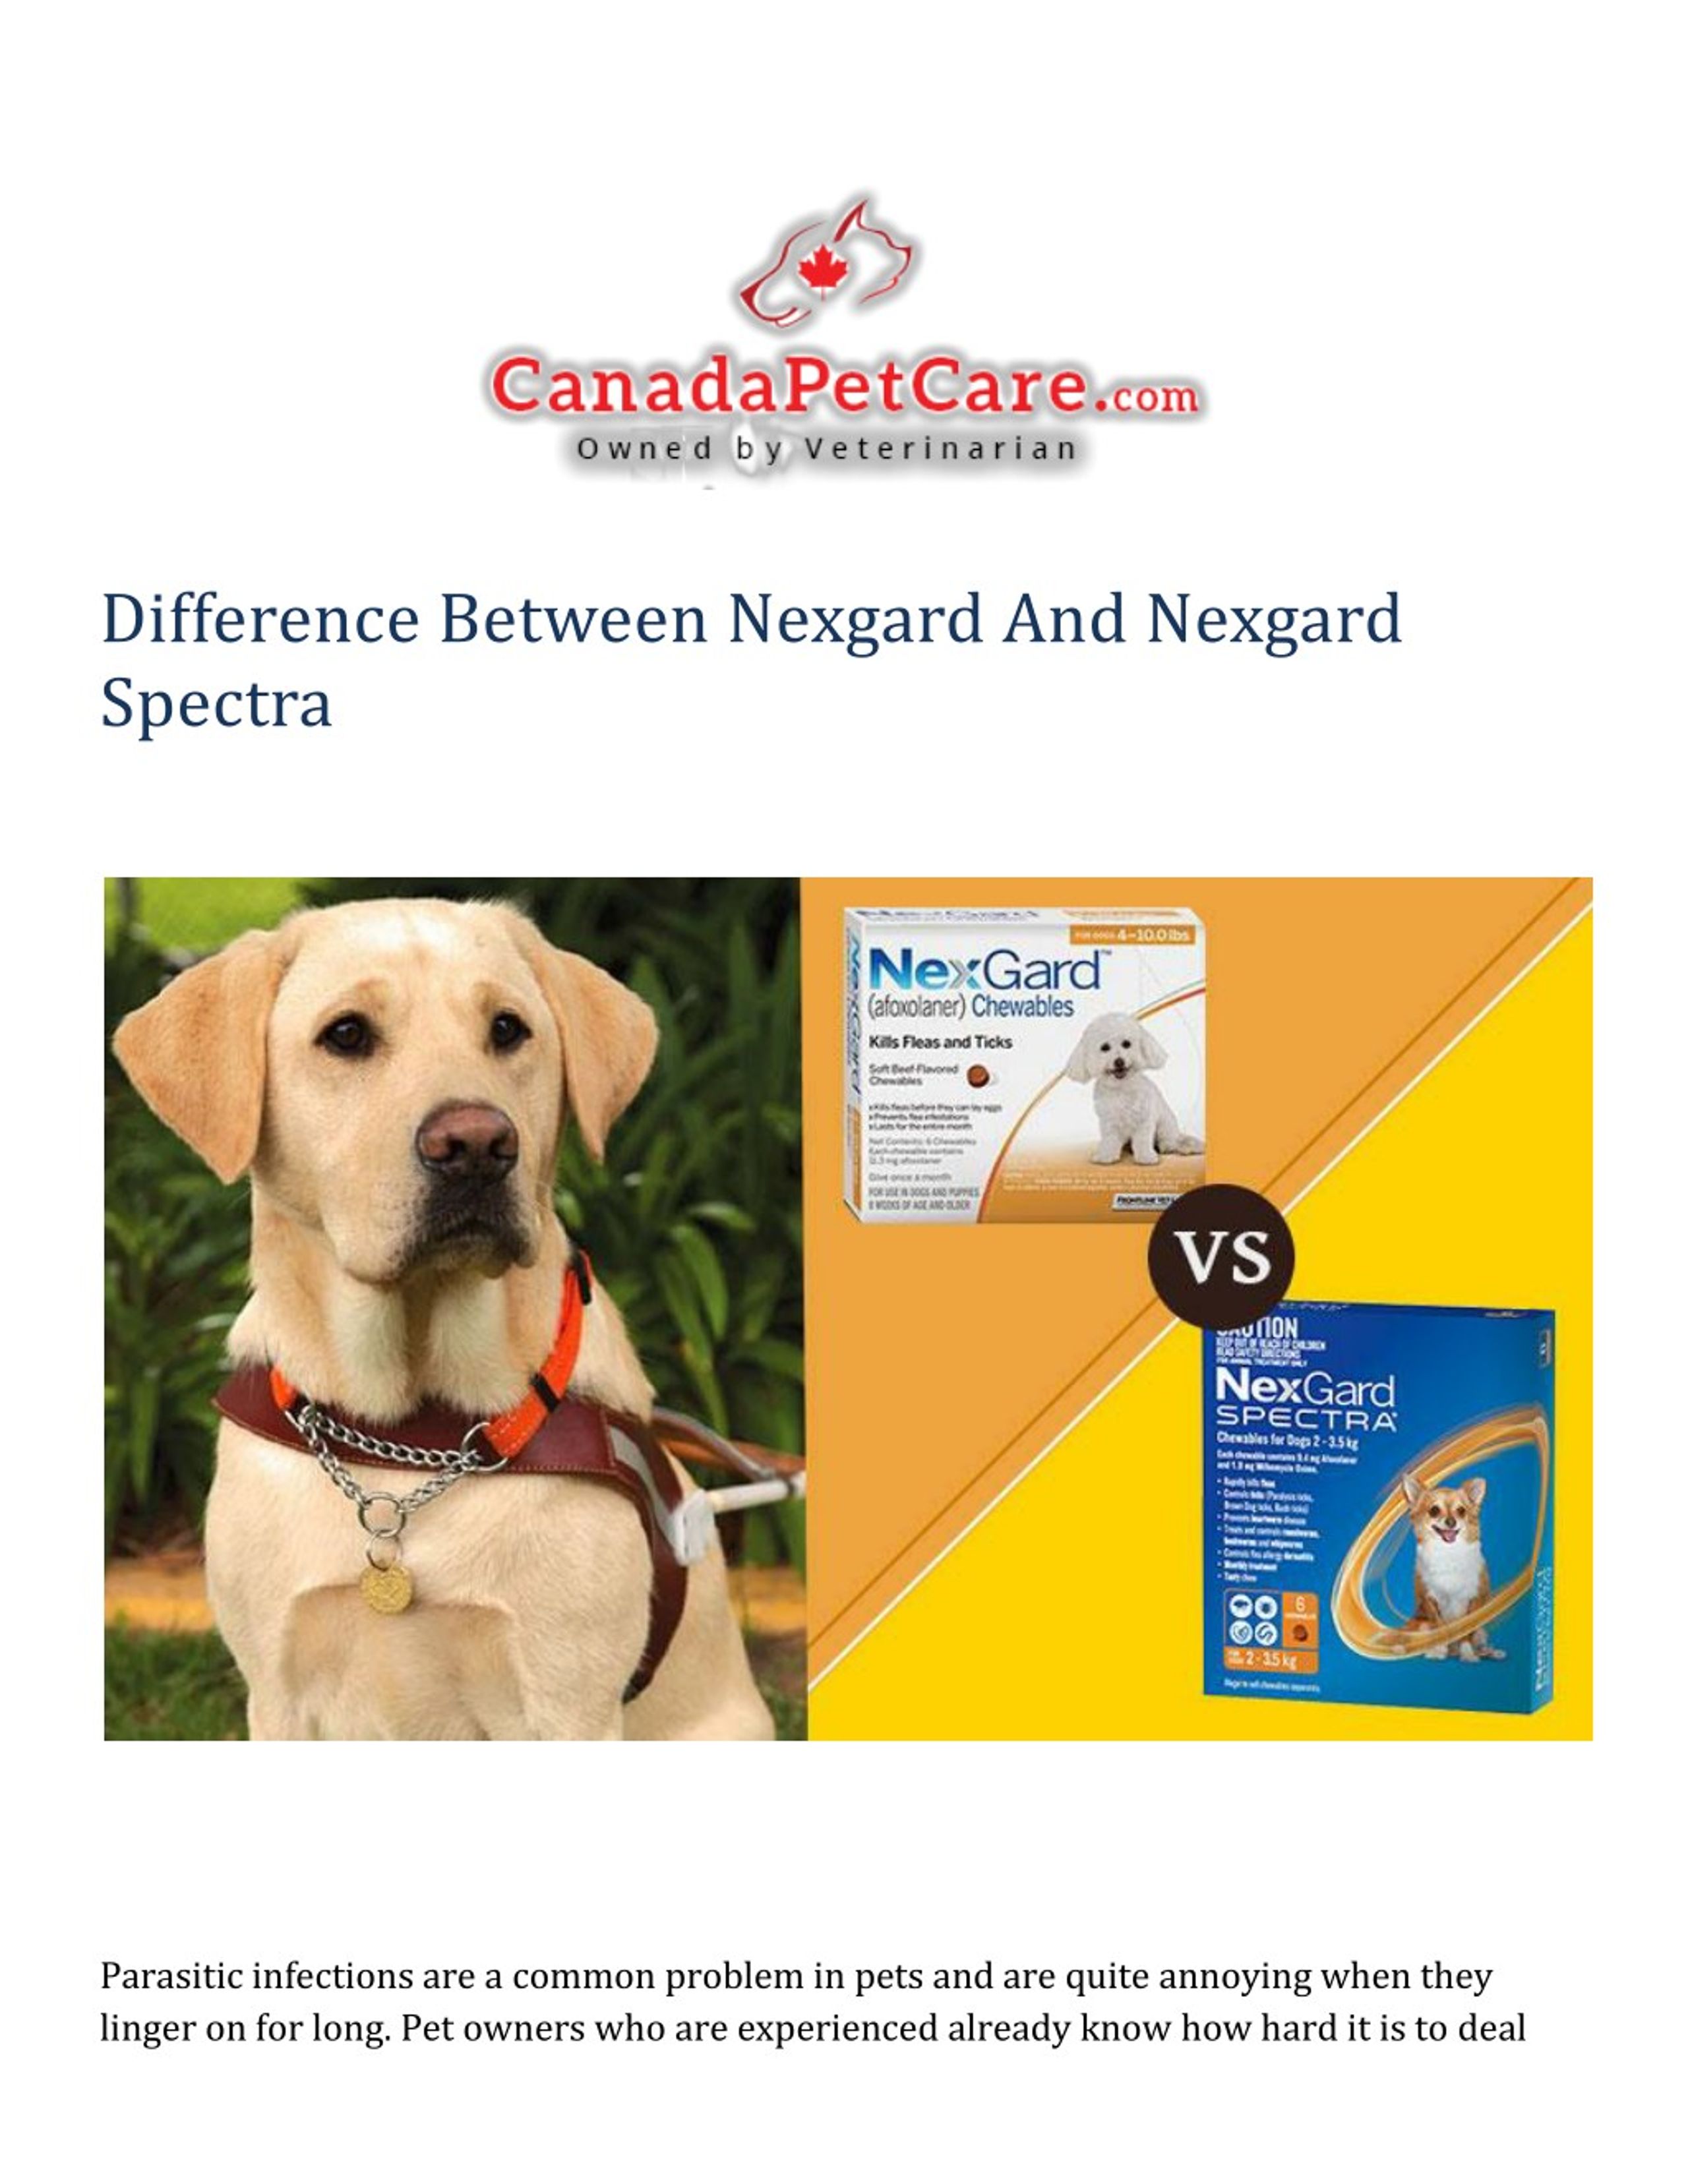 https://image4.slideserve.com/8021217/difference-between-nexgard-and-nexgard-spectra-l.jpg